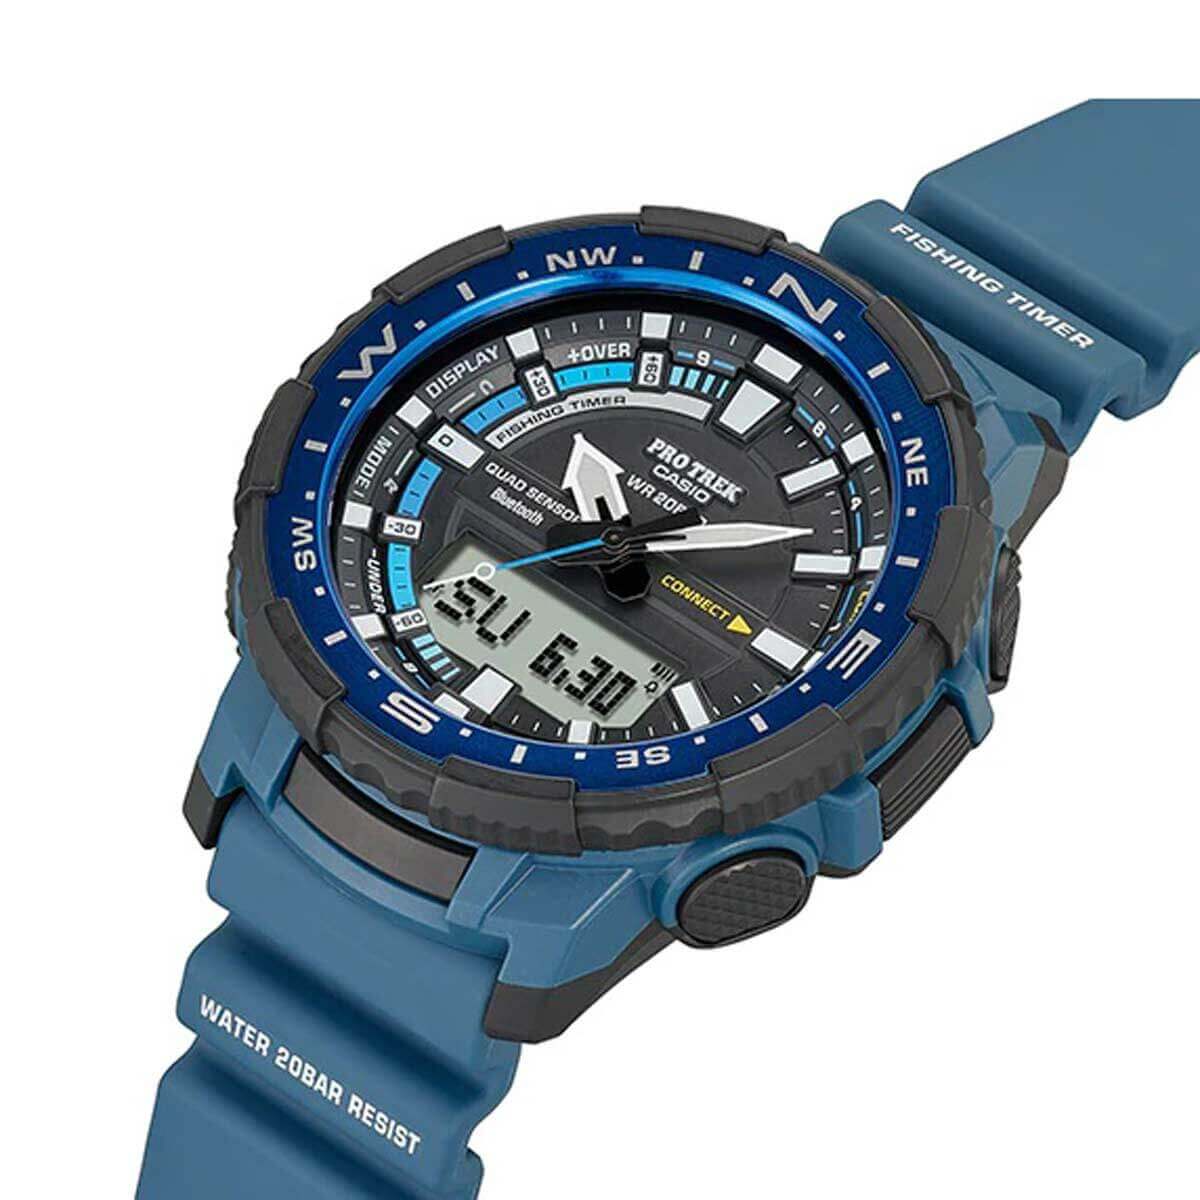 Casio PRTB70-2 Men's Pro Trek Blue Resin Strap Ana-Digi Watch - image 2 of 3